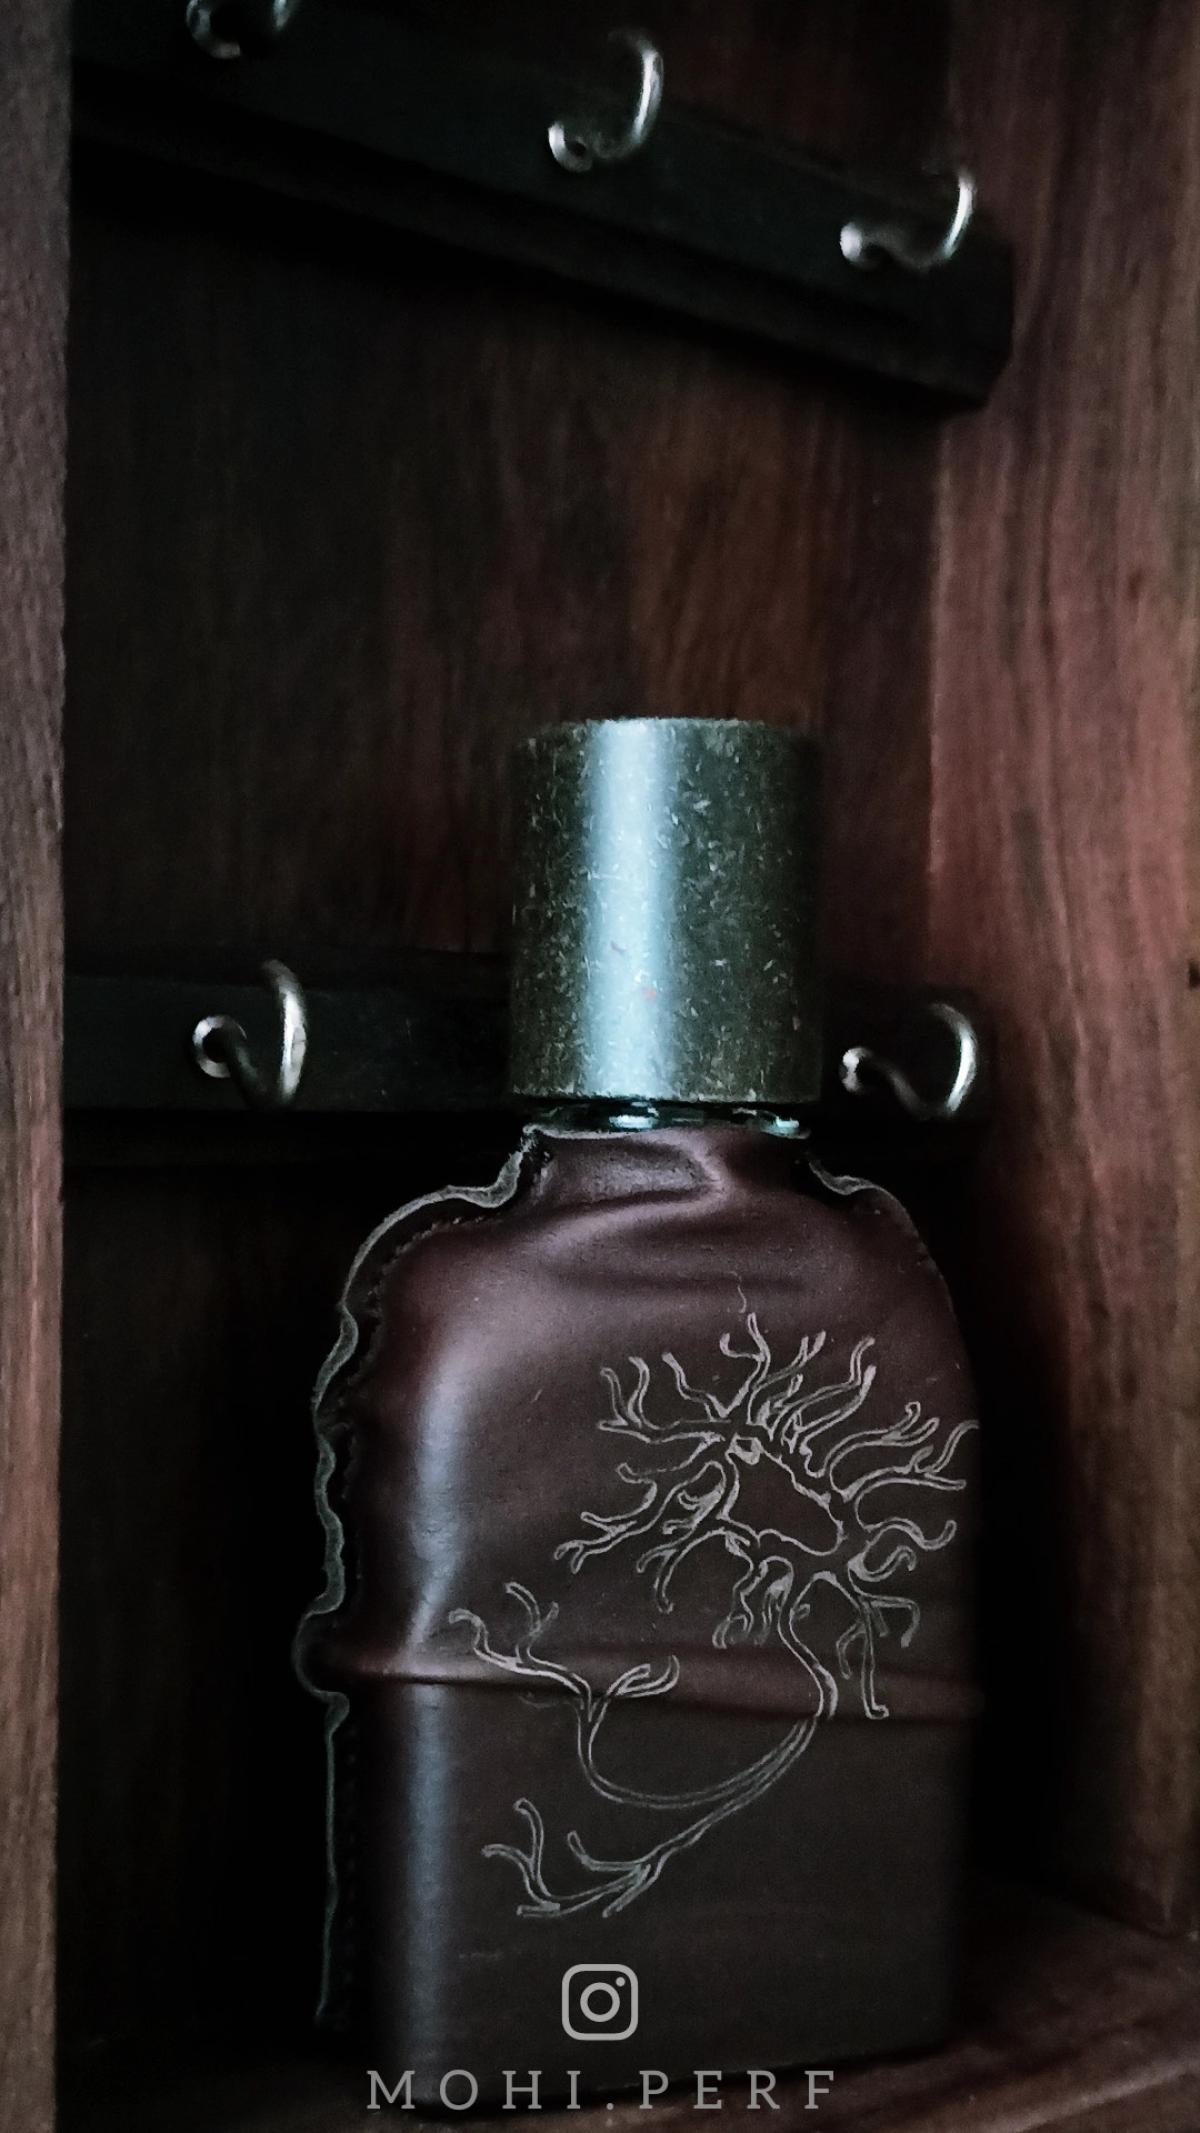 Cuoium Orto Parisi perfume - a fragrance for women and men 2021